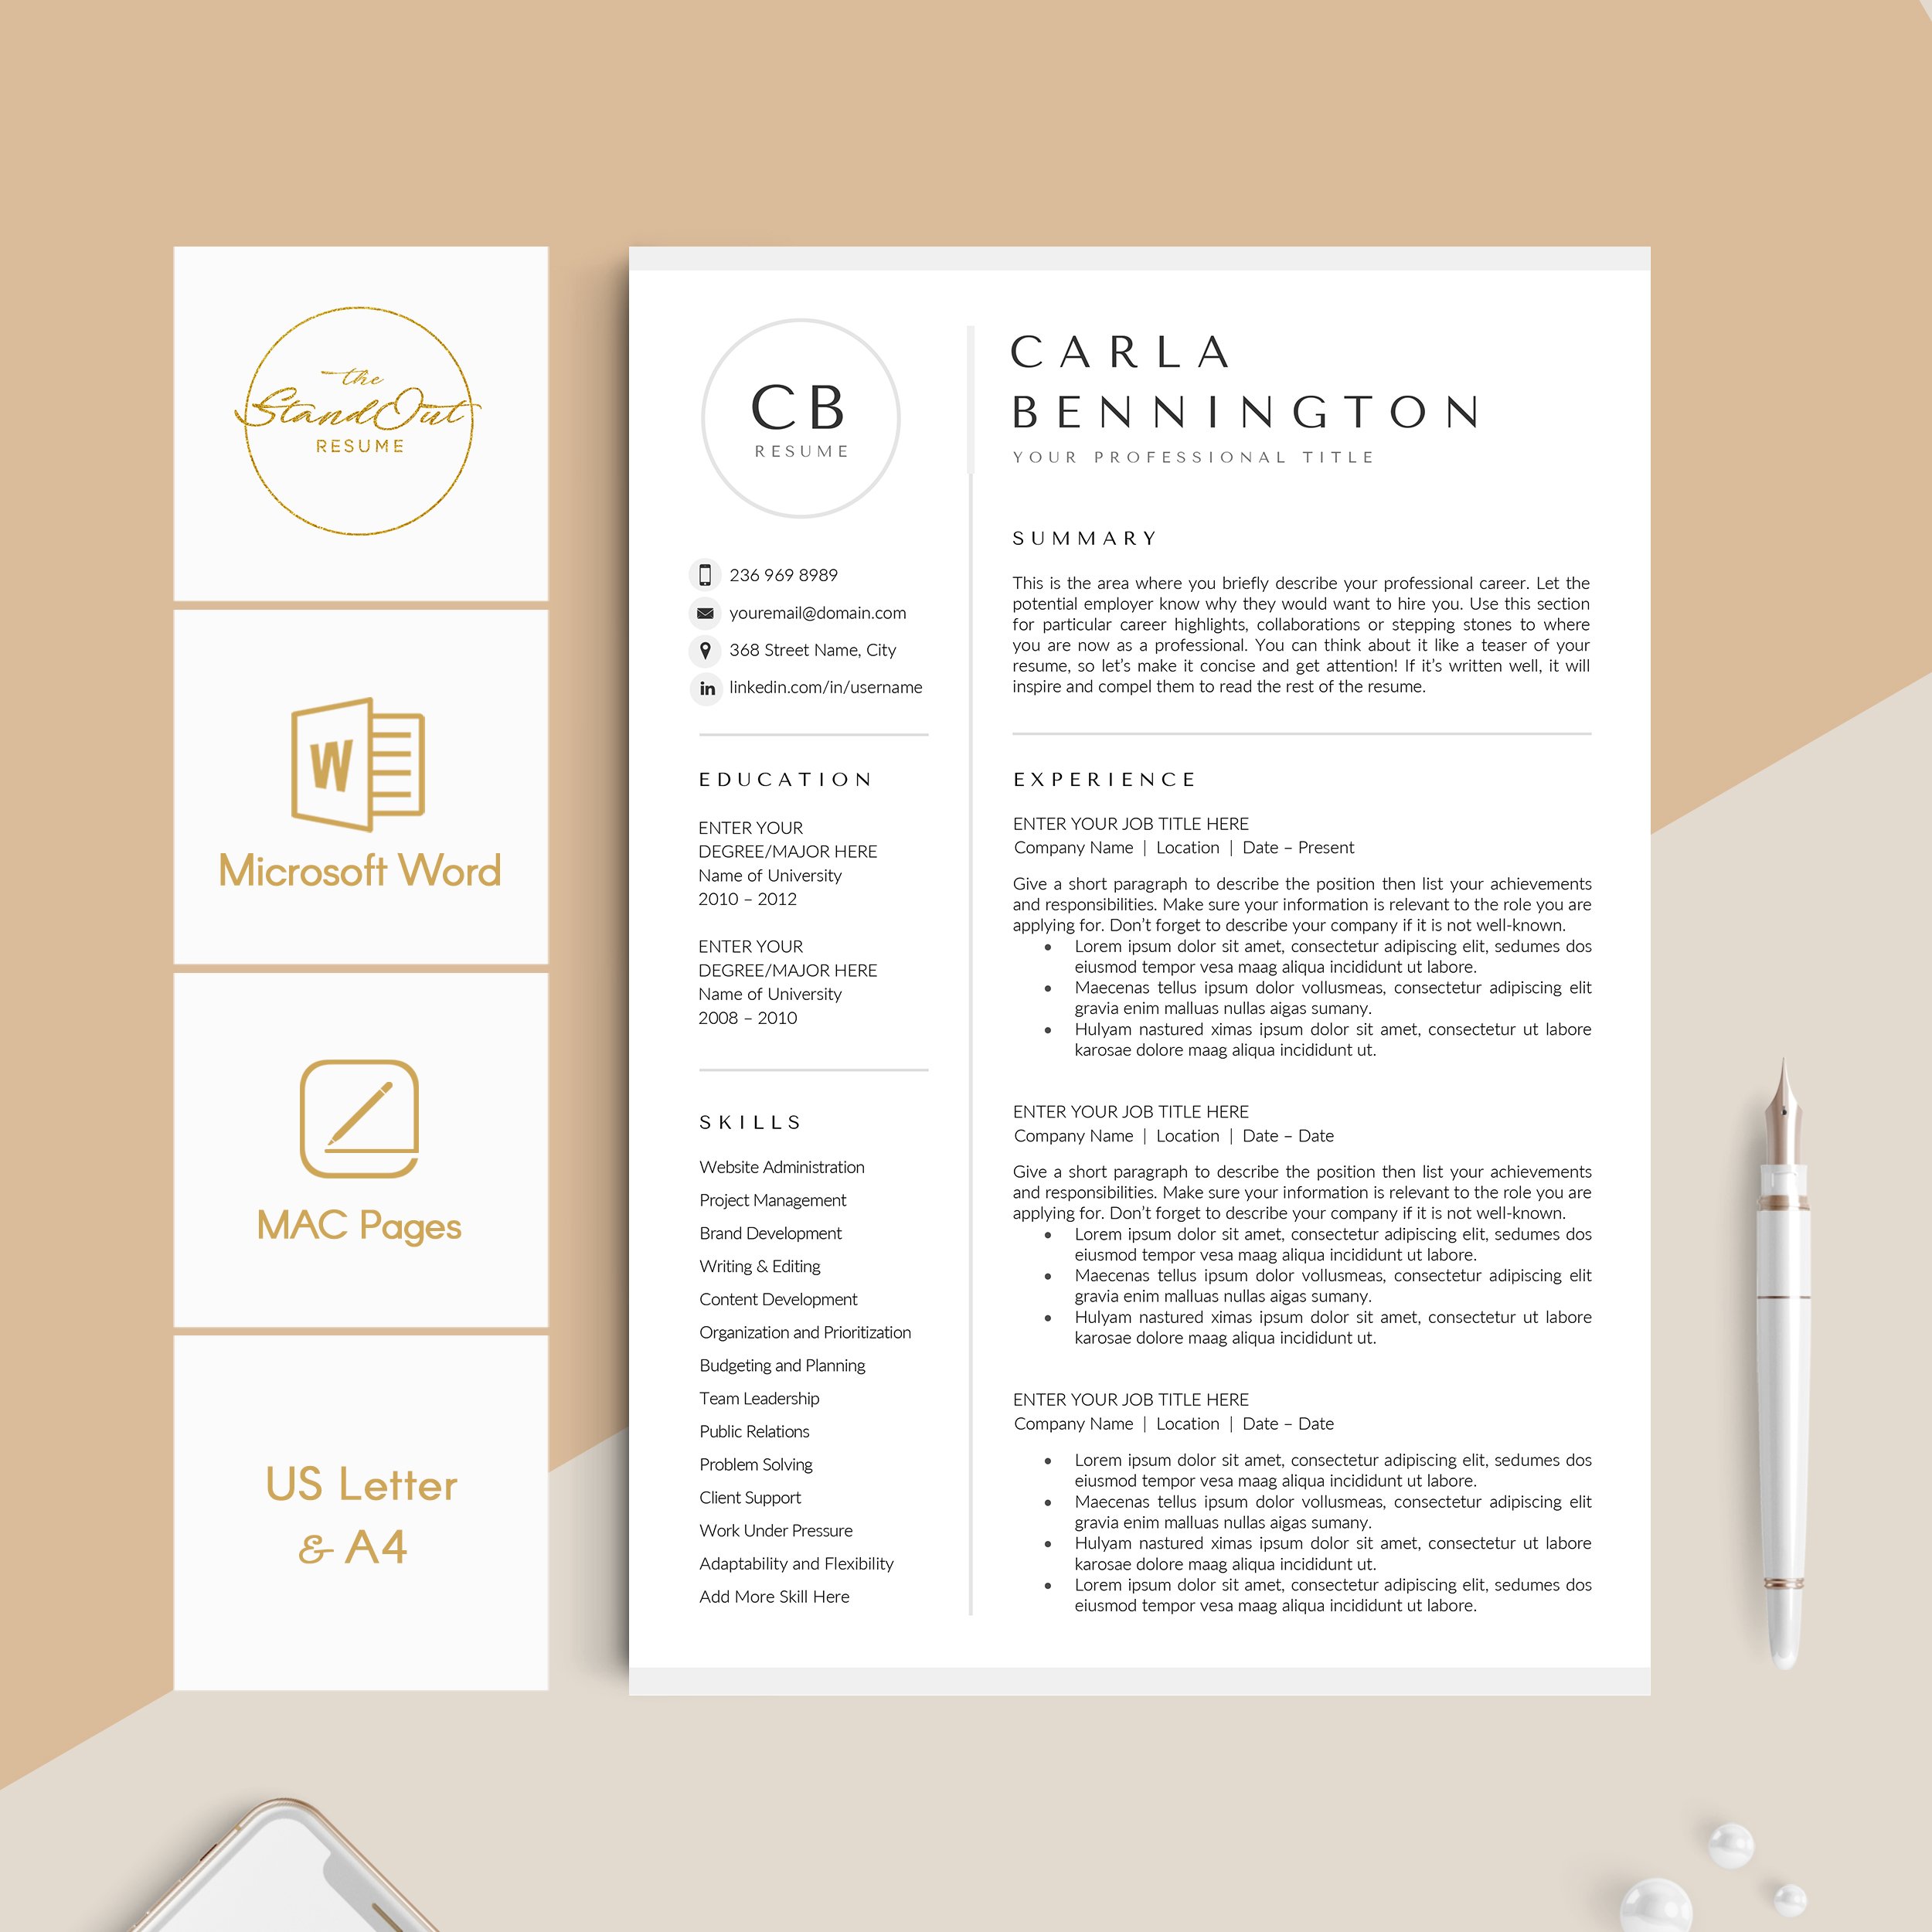 Resume/CV Template - CARLA preview image.